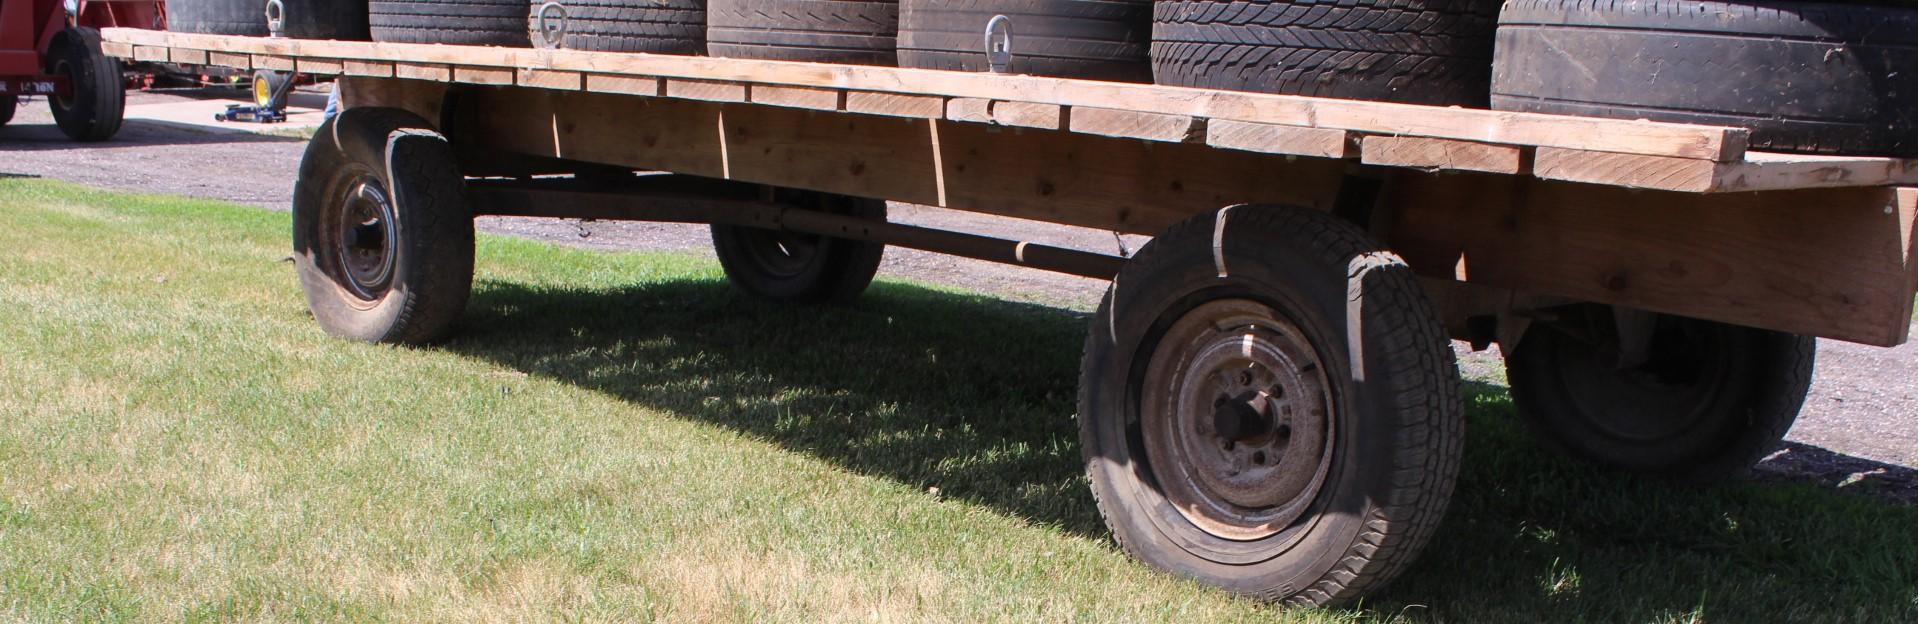 Flat Rack on 4 Wheel Gear, 8’x15’10” Wood Deck